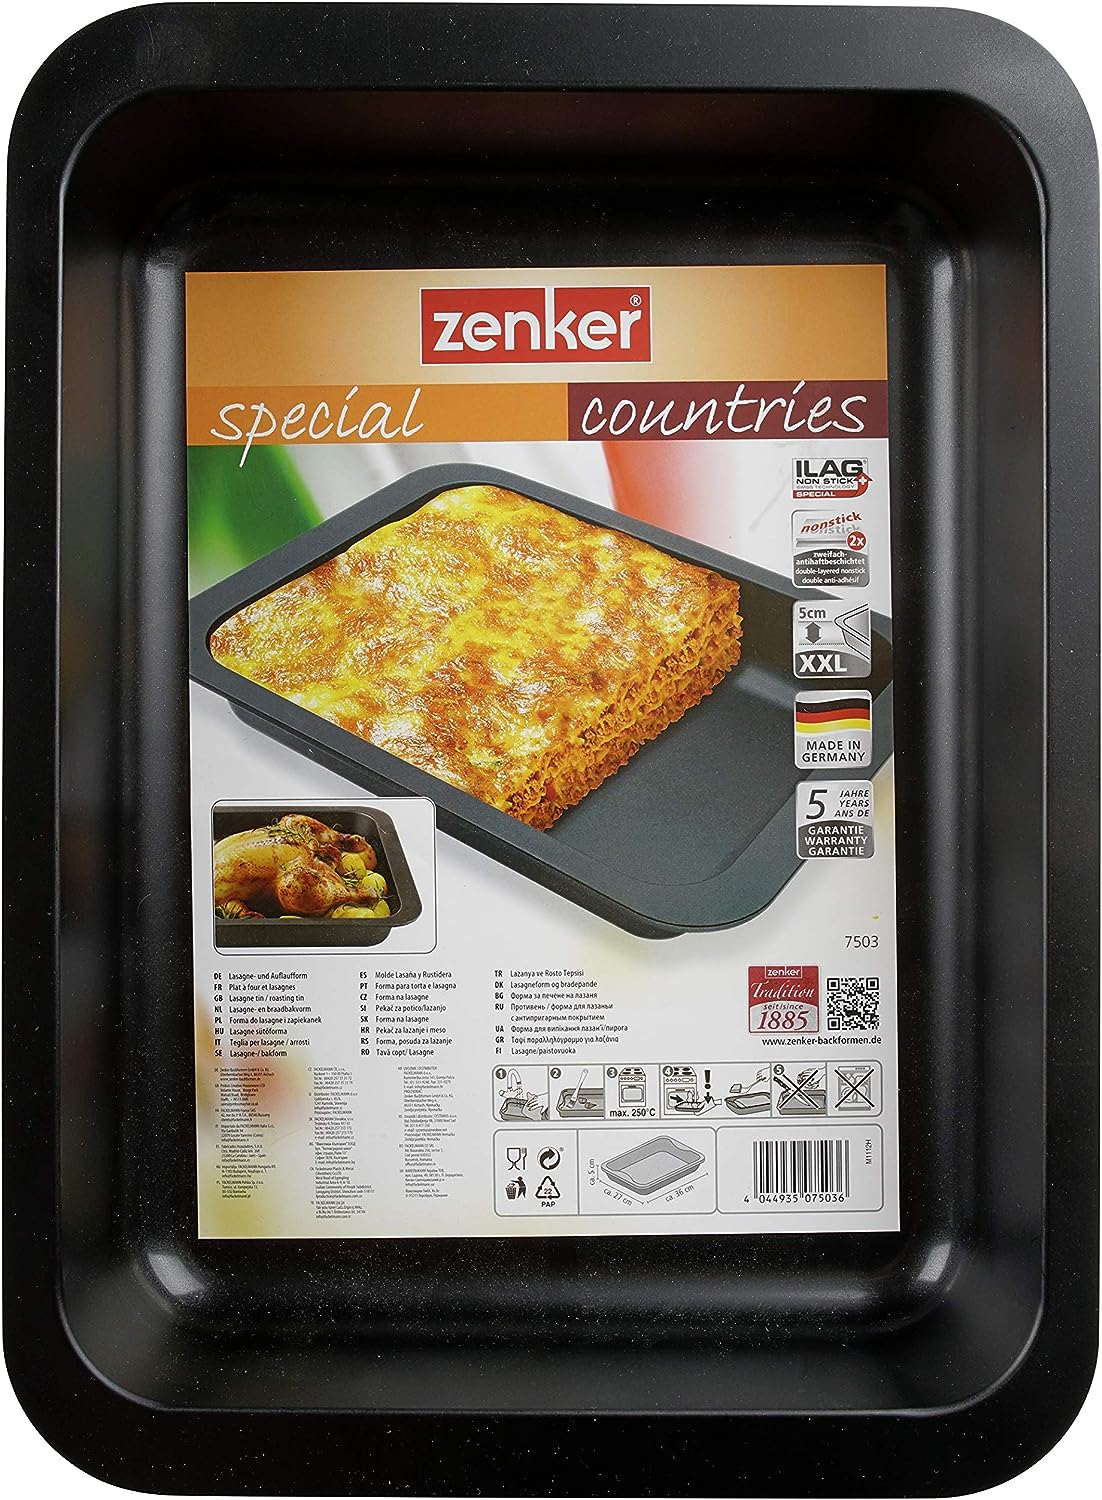 Zenker "Special Countries" Lasagne Tin And Roasting Pan, Black